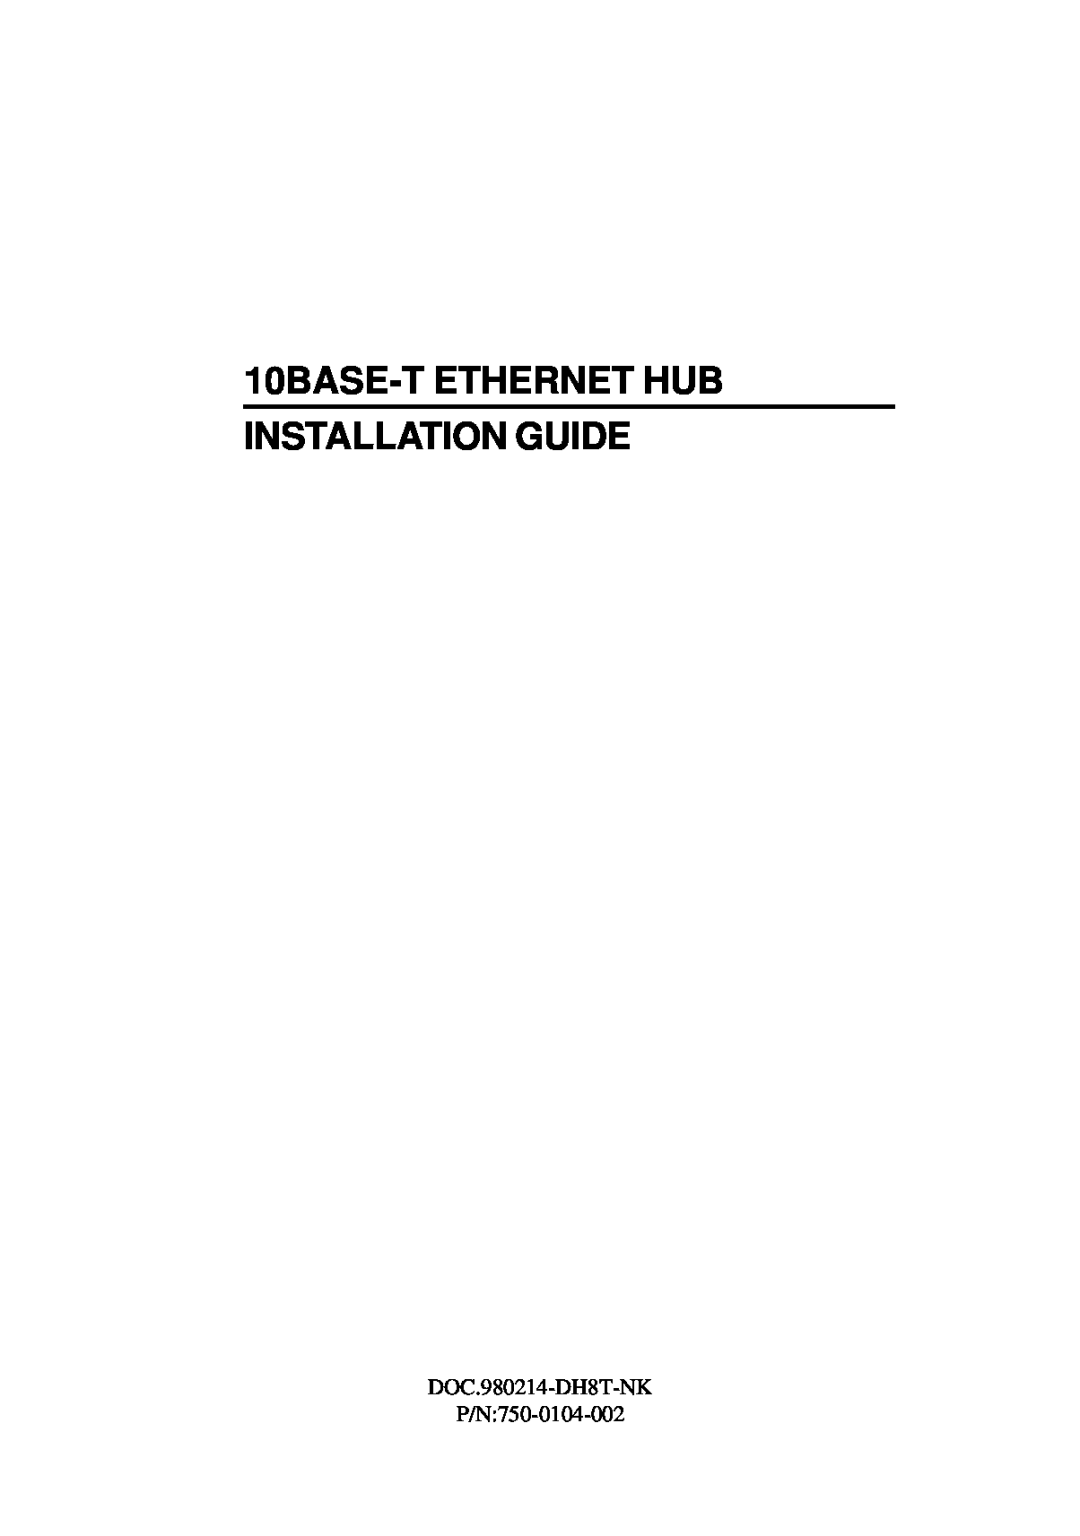 KTI Networks DH-8T manual 10BASE-T ETHERNET HUB INSTALLATION GUIDE, DOC.980214-DH8T-NK P/N750-0104-002 